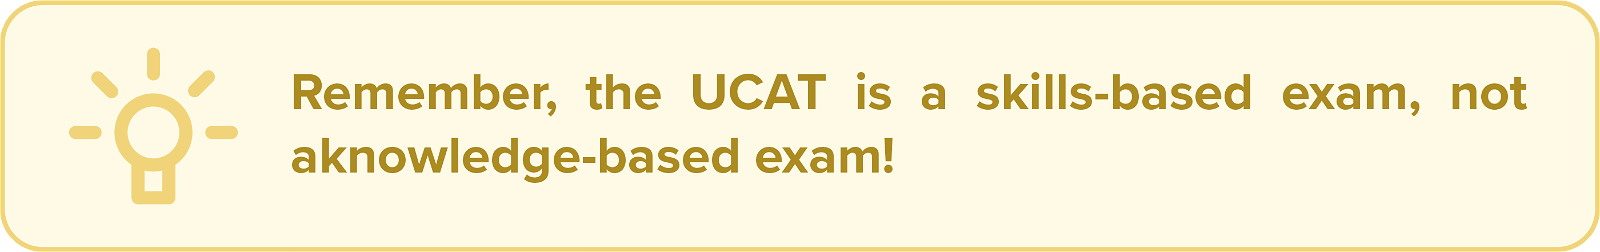 ucat skill-based exam, studysmarter magazine